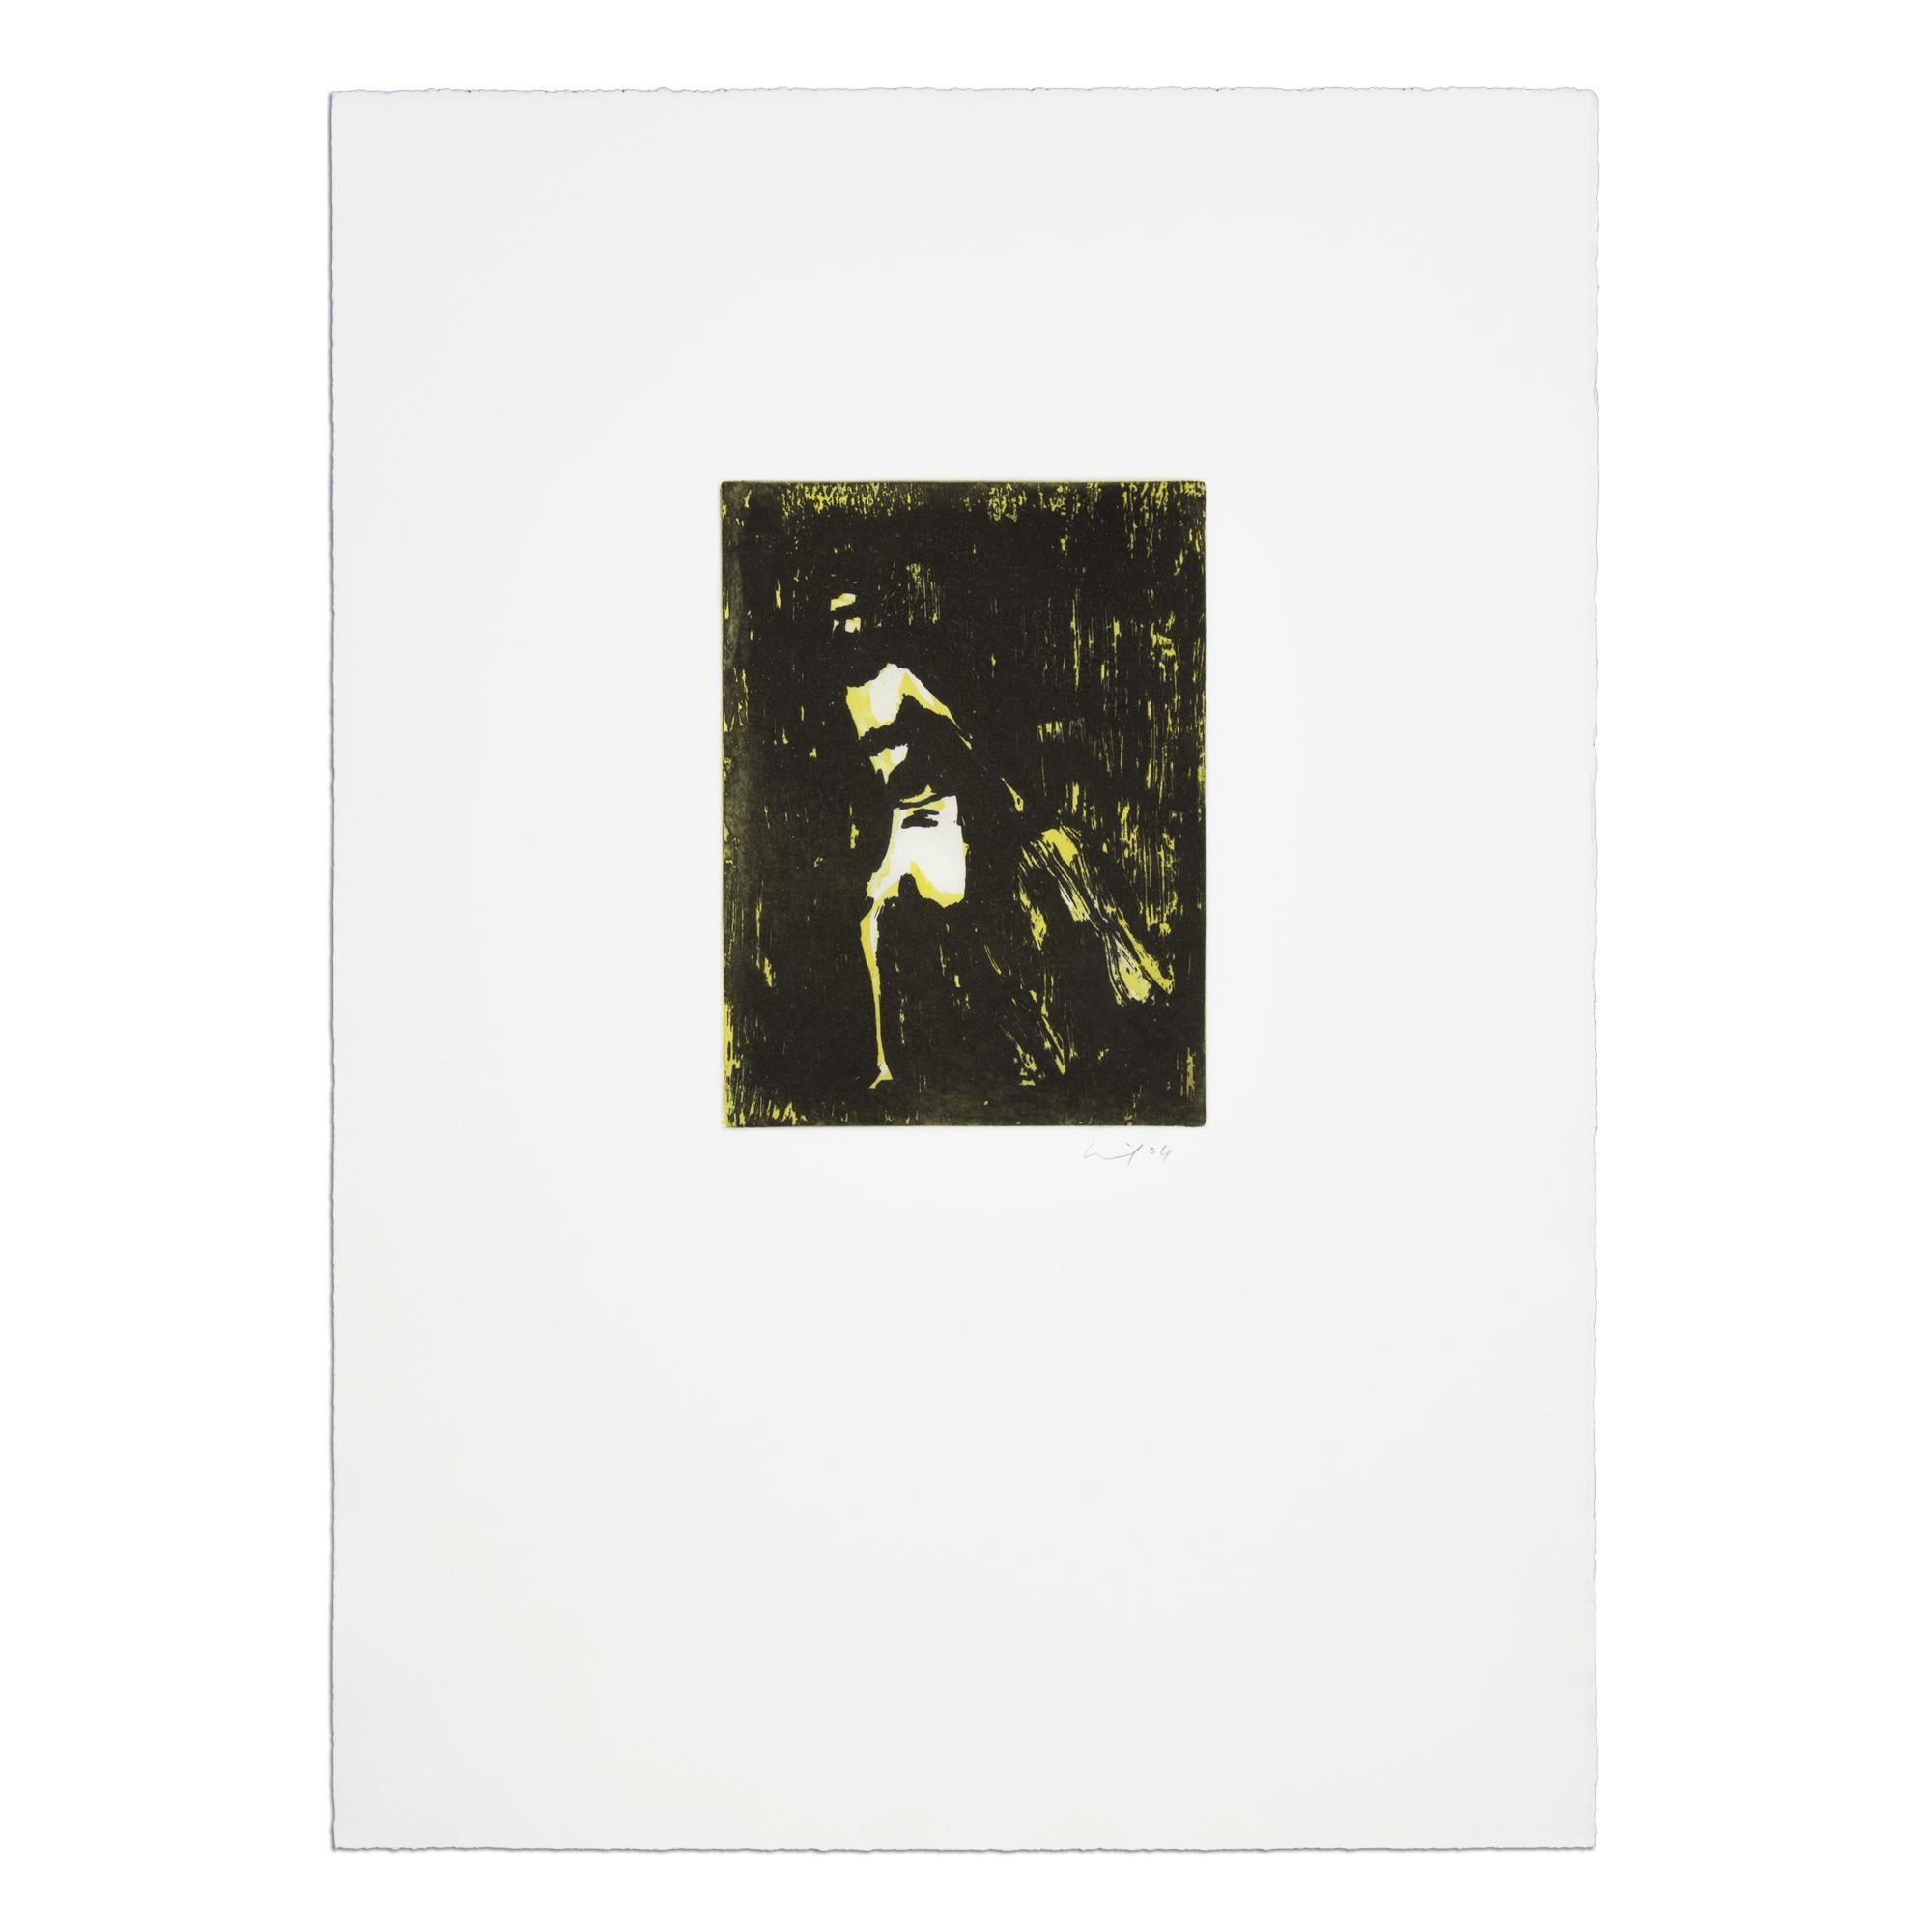 Peter Doig (born 1959 in Edinburgh)
Fisherman, 2004
Series: From the “Black Palms” portfolio
Medium: Etching in colors, on 250g/qm Zerkall paper
Medium: 53.5 × 38 cm (21 1/10 × 15 in)
Publisher: Griffelkunst-Vereinigung, Hamburg
Printer: